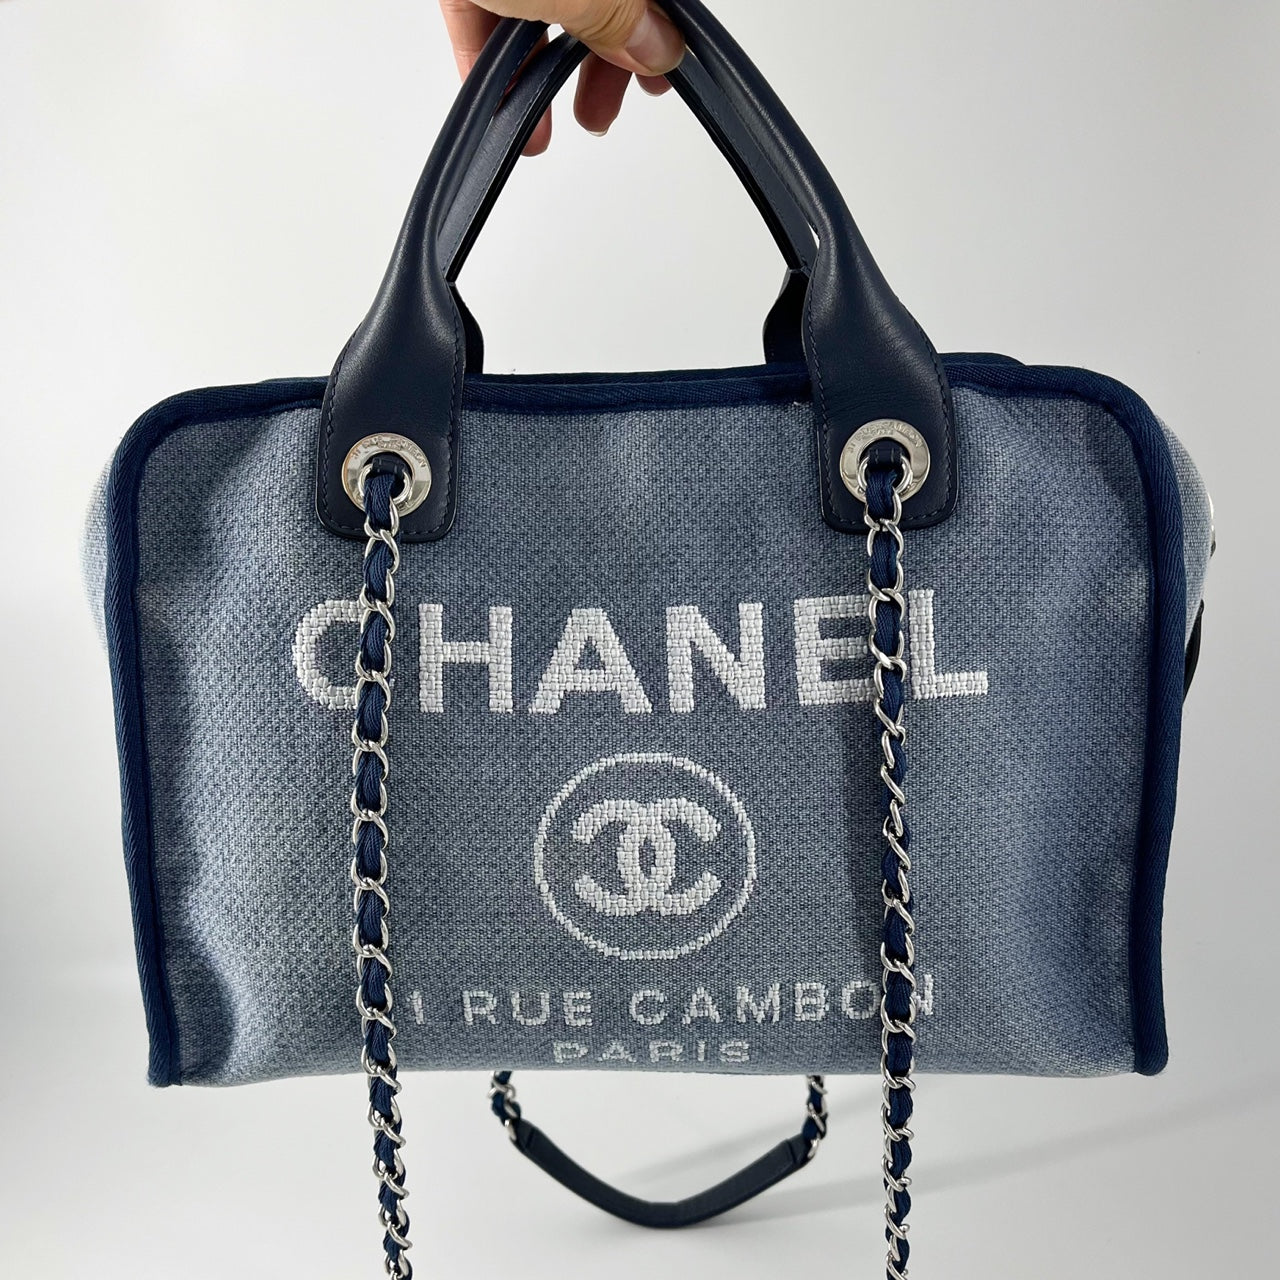 chanel shopper bag